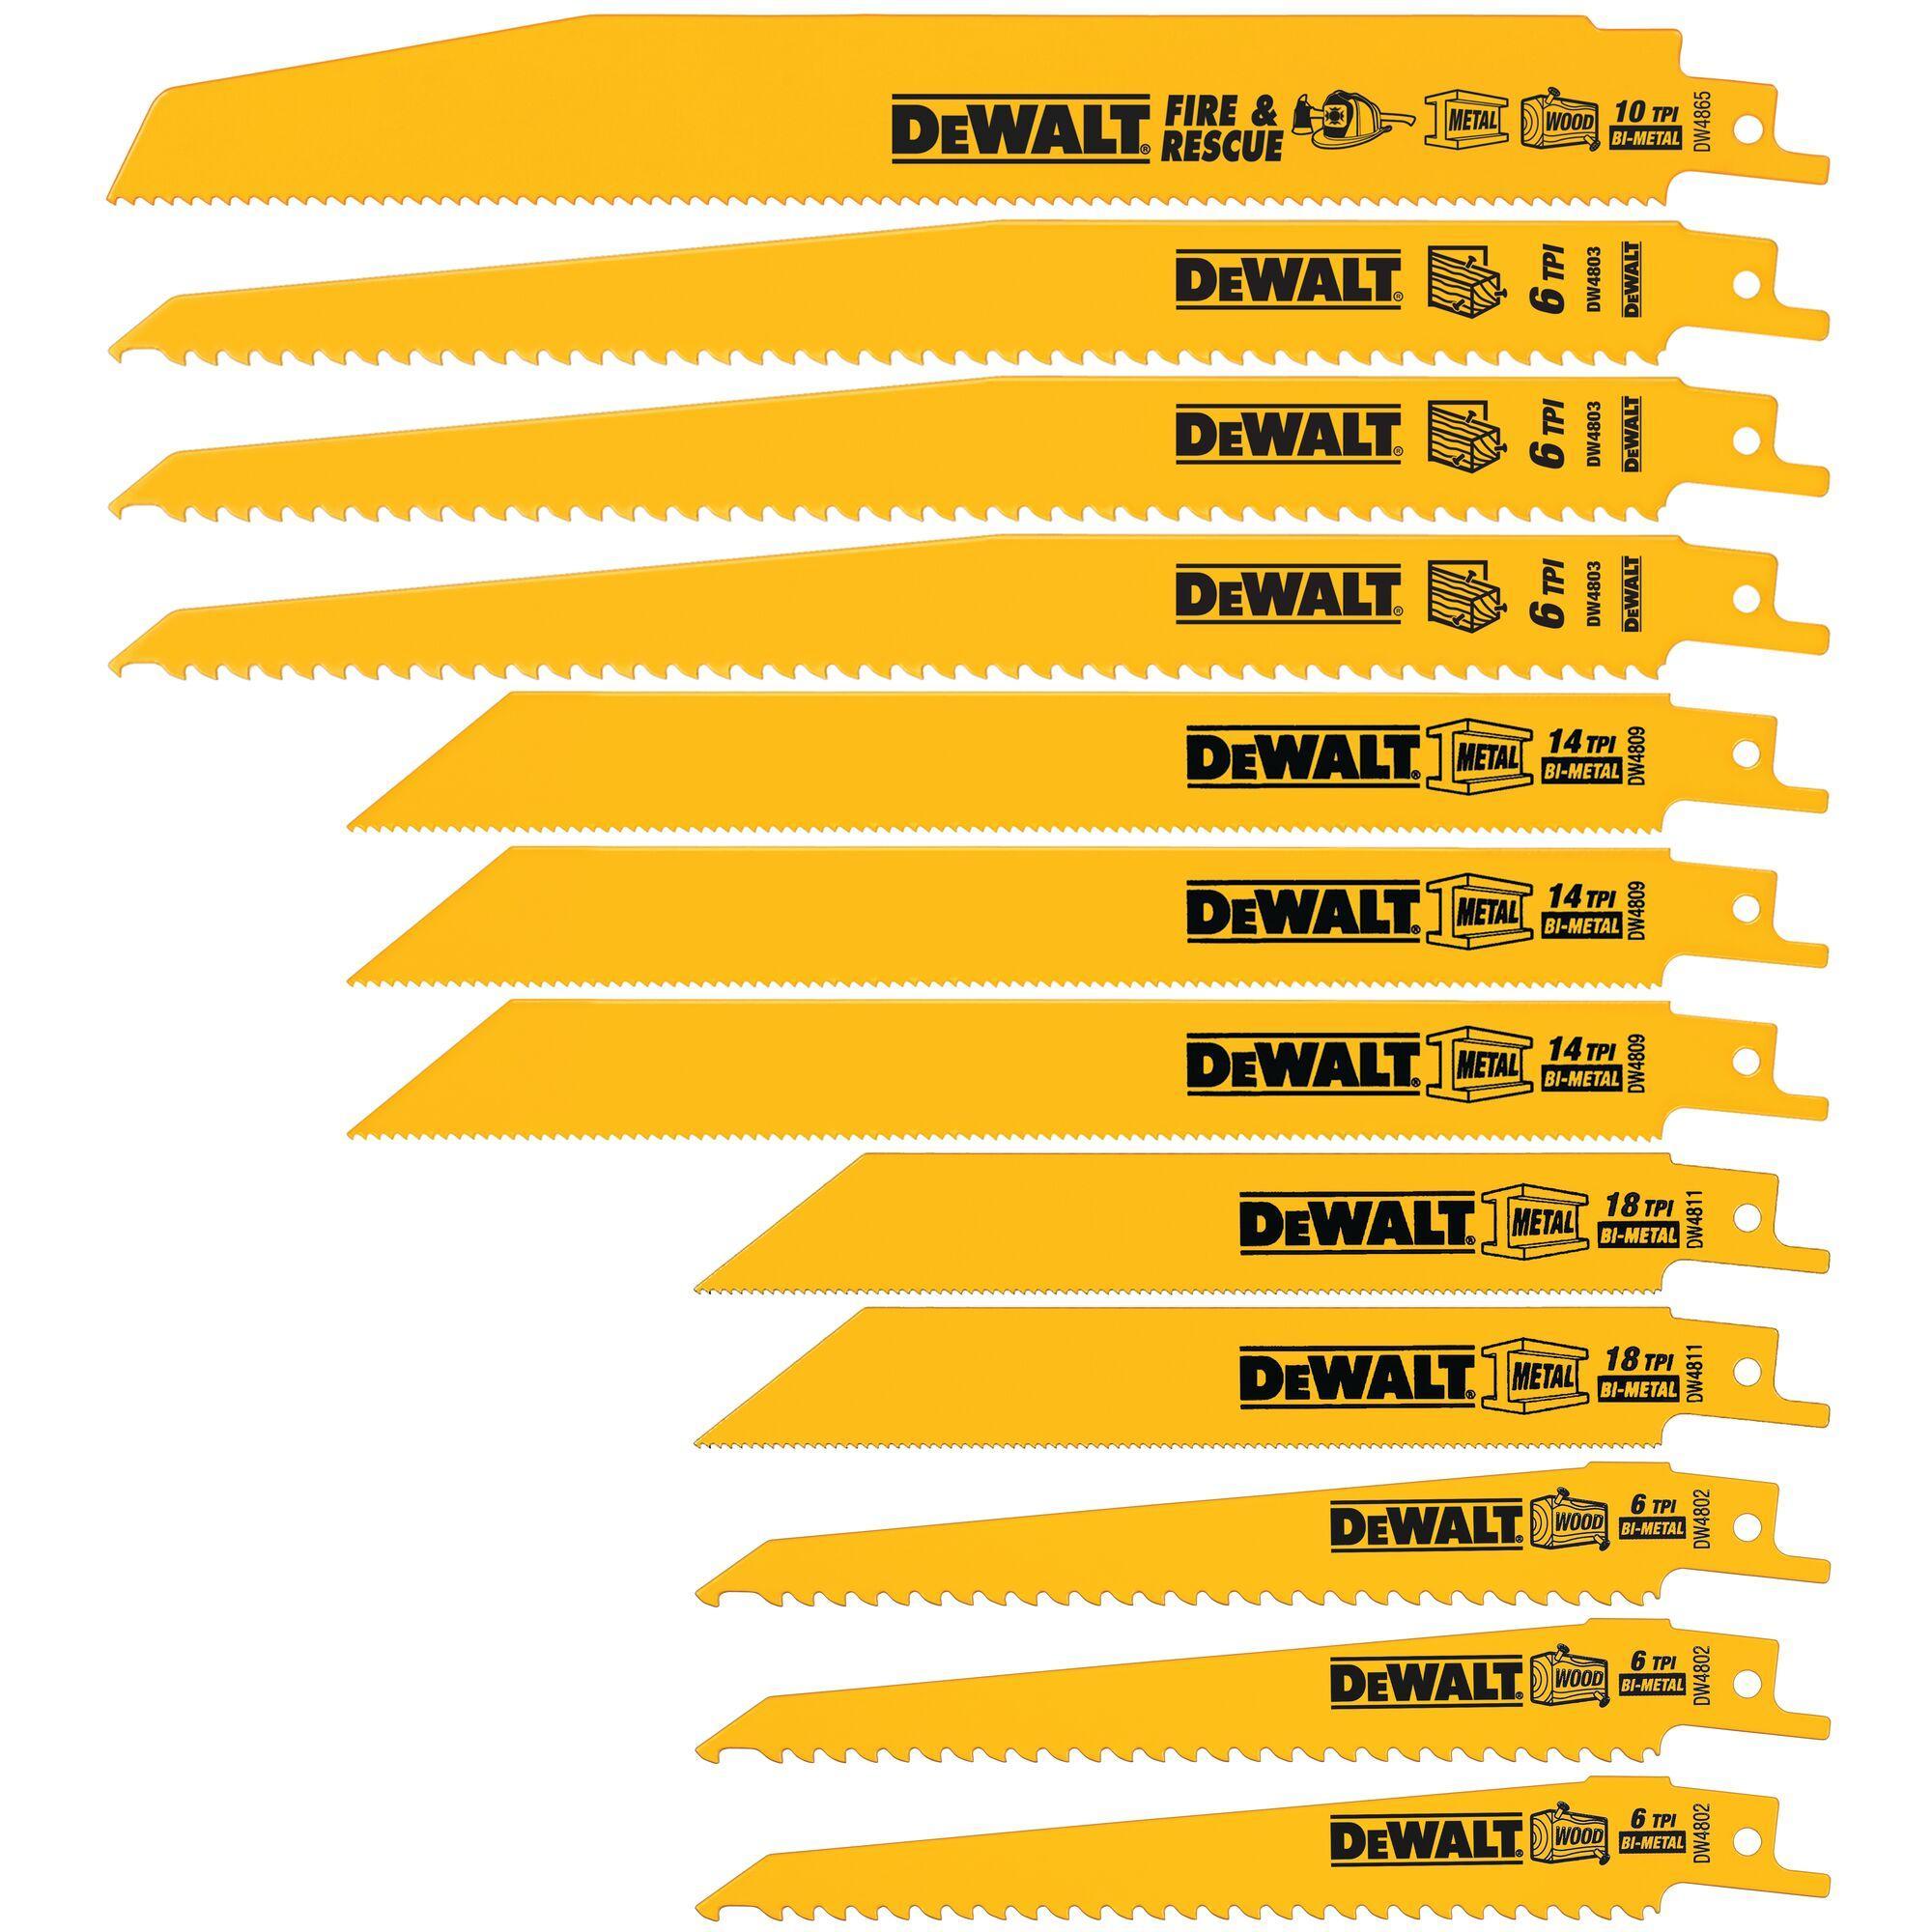 DeWALT® DW3742C Jig Saw Blade Set With Standard Case, 14 Pieces, 3 to 5 in L x 0.3 to 0.39 in W x 0.04 to 0.05 in THK Blade, 6/10/12/18/32 TPI, Pointed Teeth, T-Shank, For Use With Jig Saws, Bi-Metal